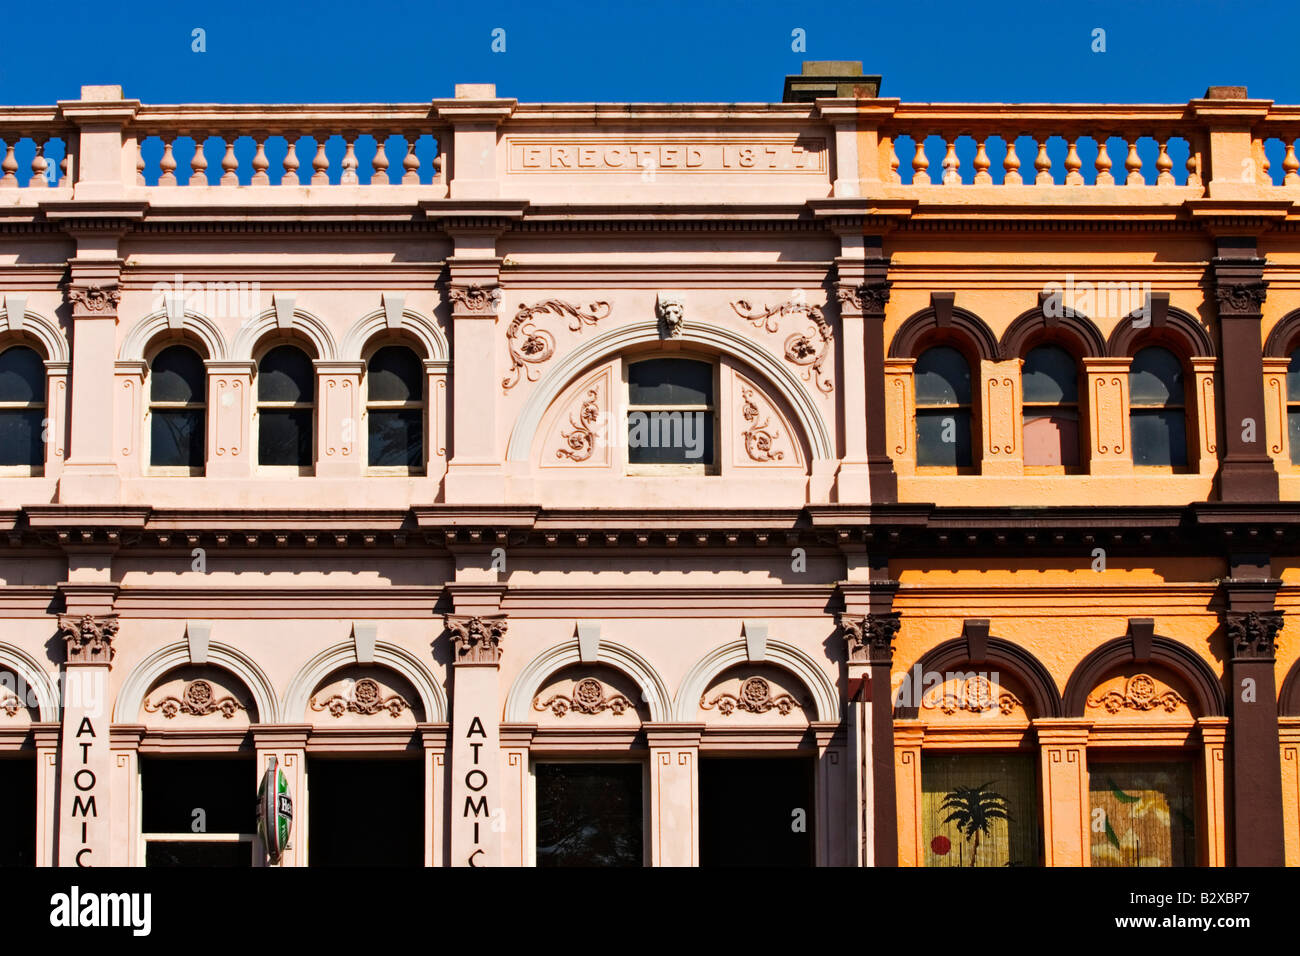 Melbourne Architecture / A grand Victorian facade located in the Melbourne Suburb of Williamstown,Australia. Stock Photo